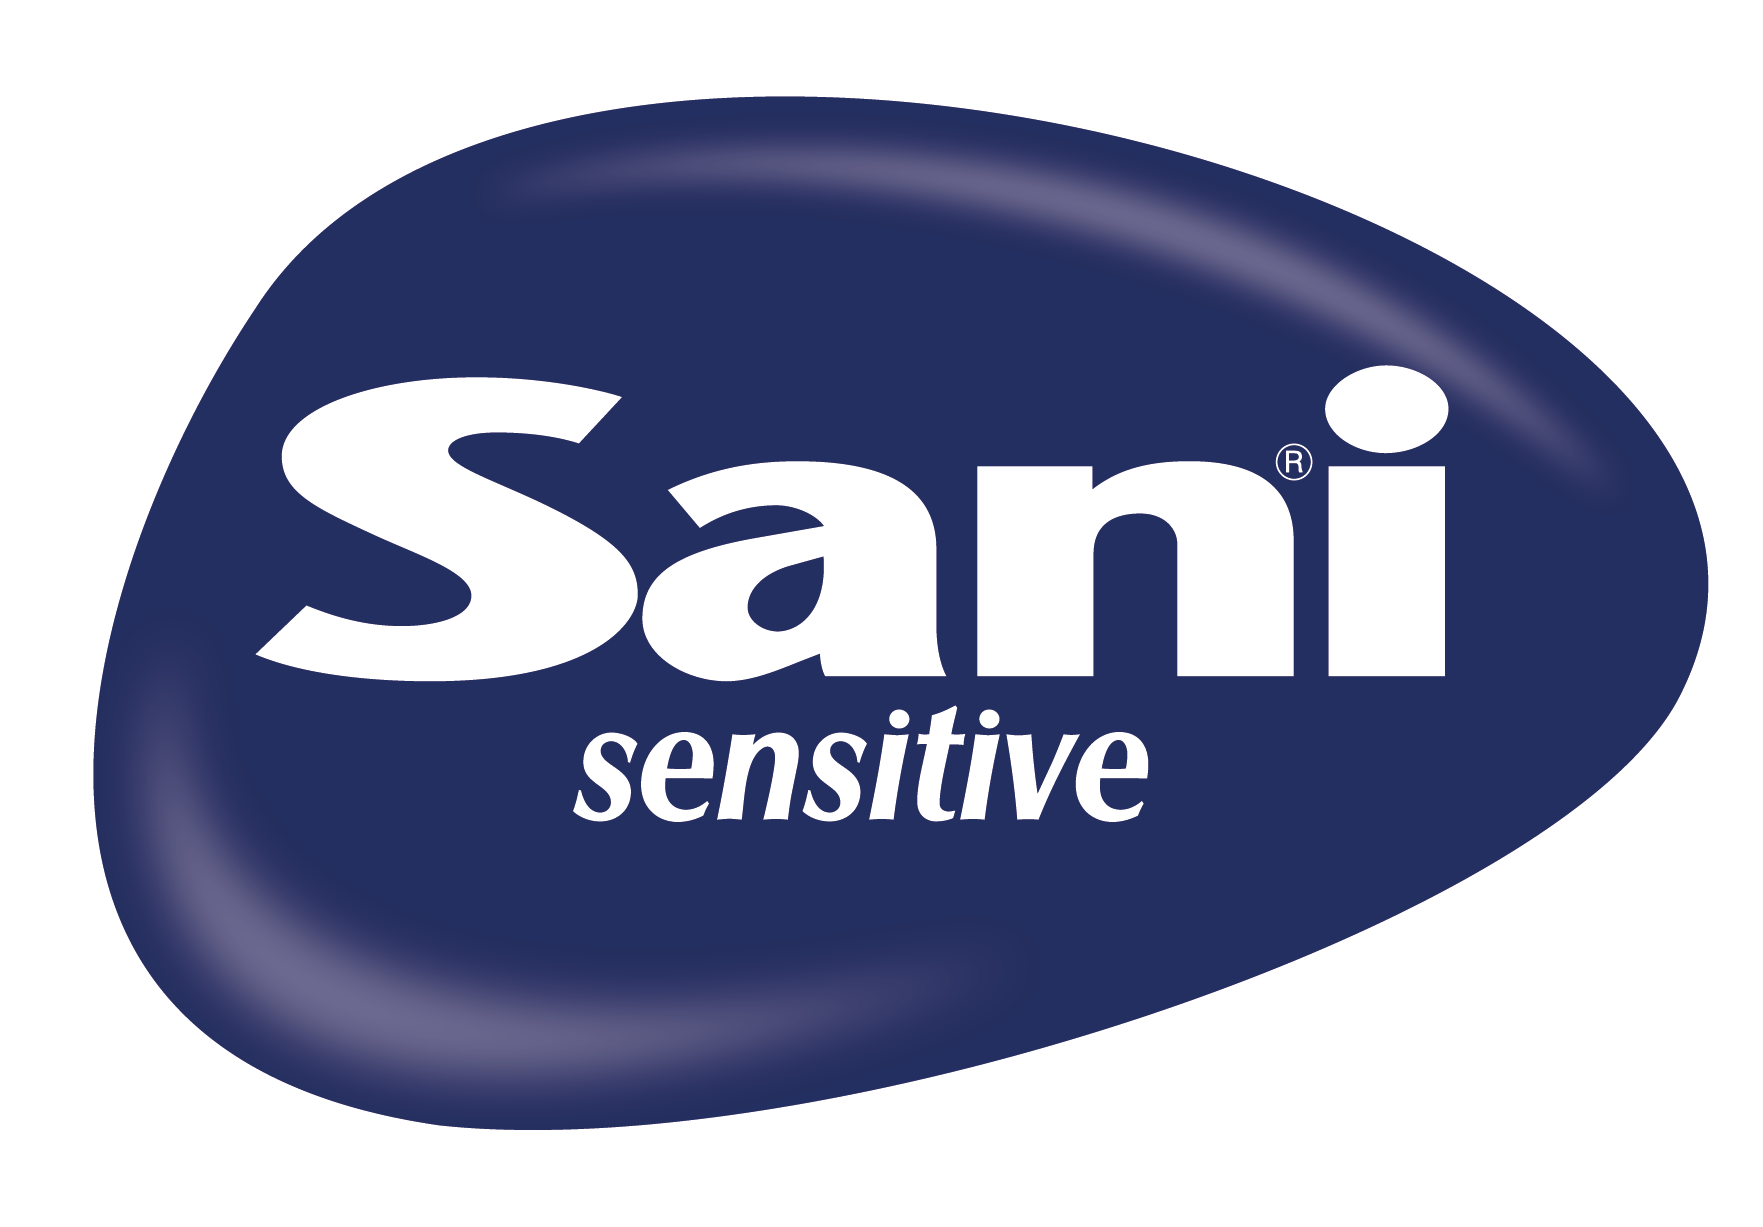 Sani Sensitive